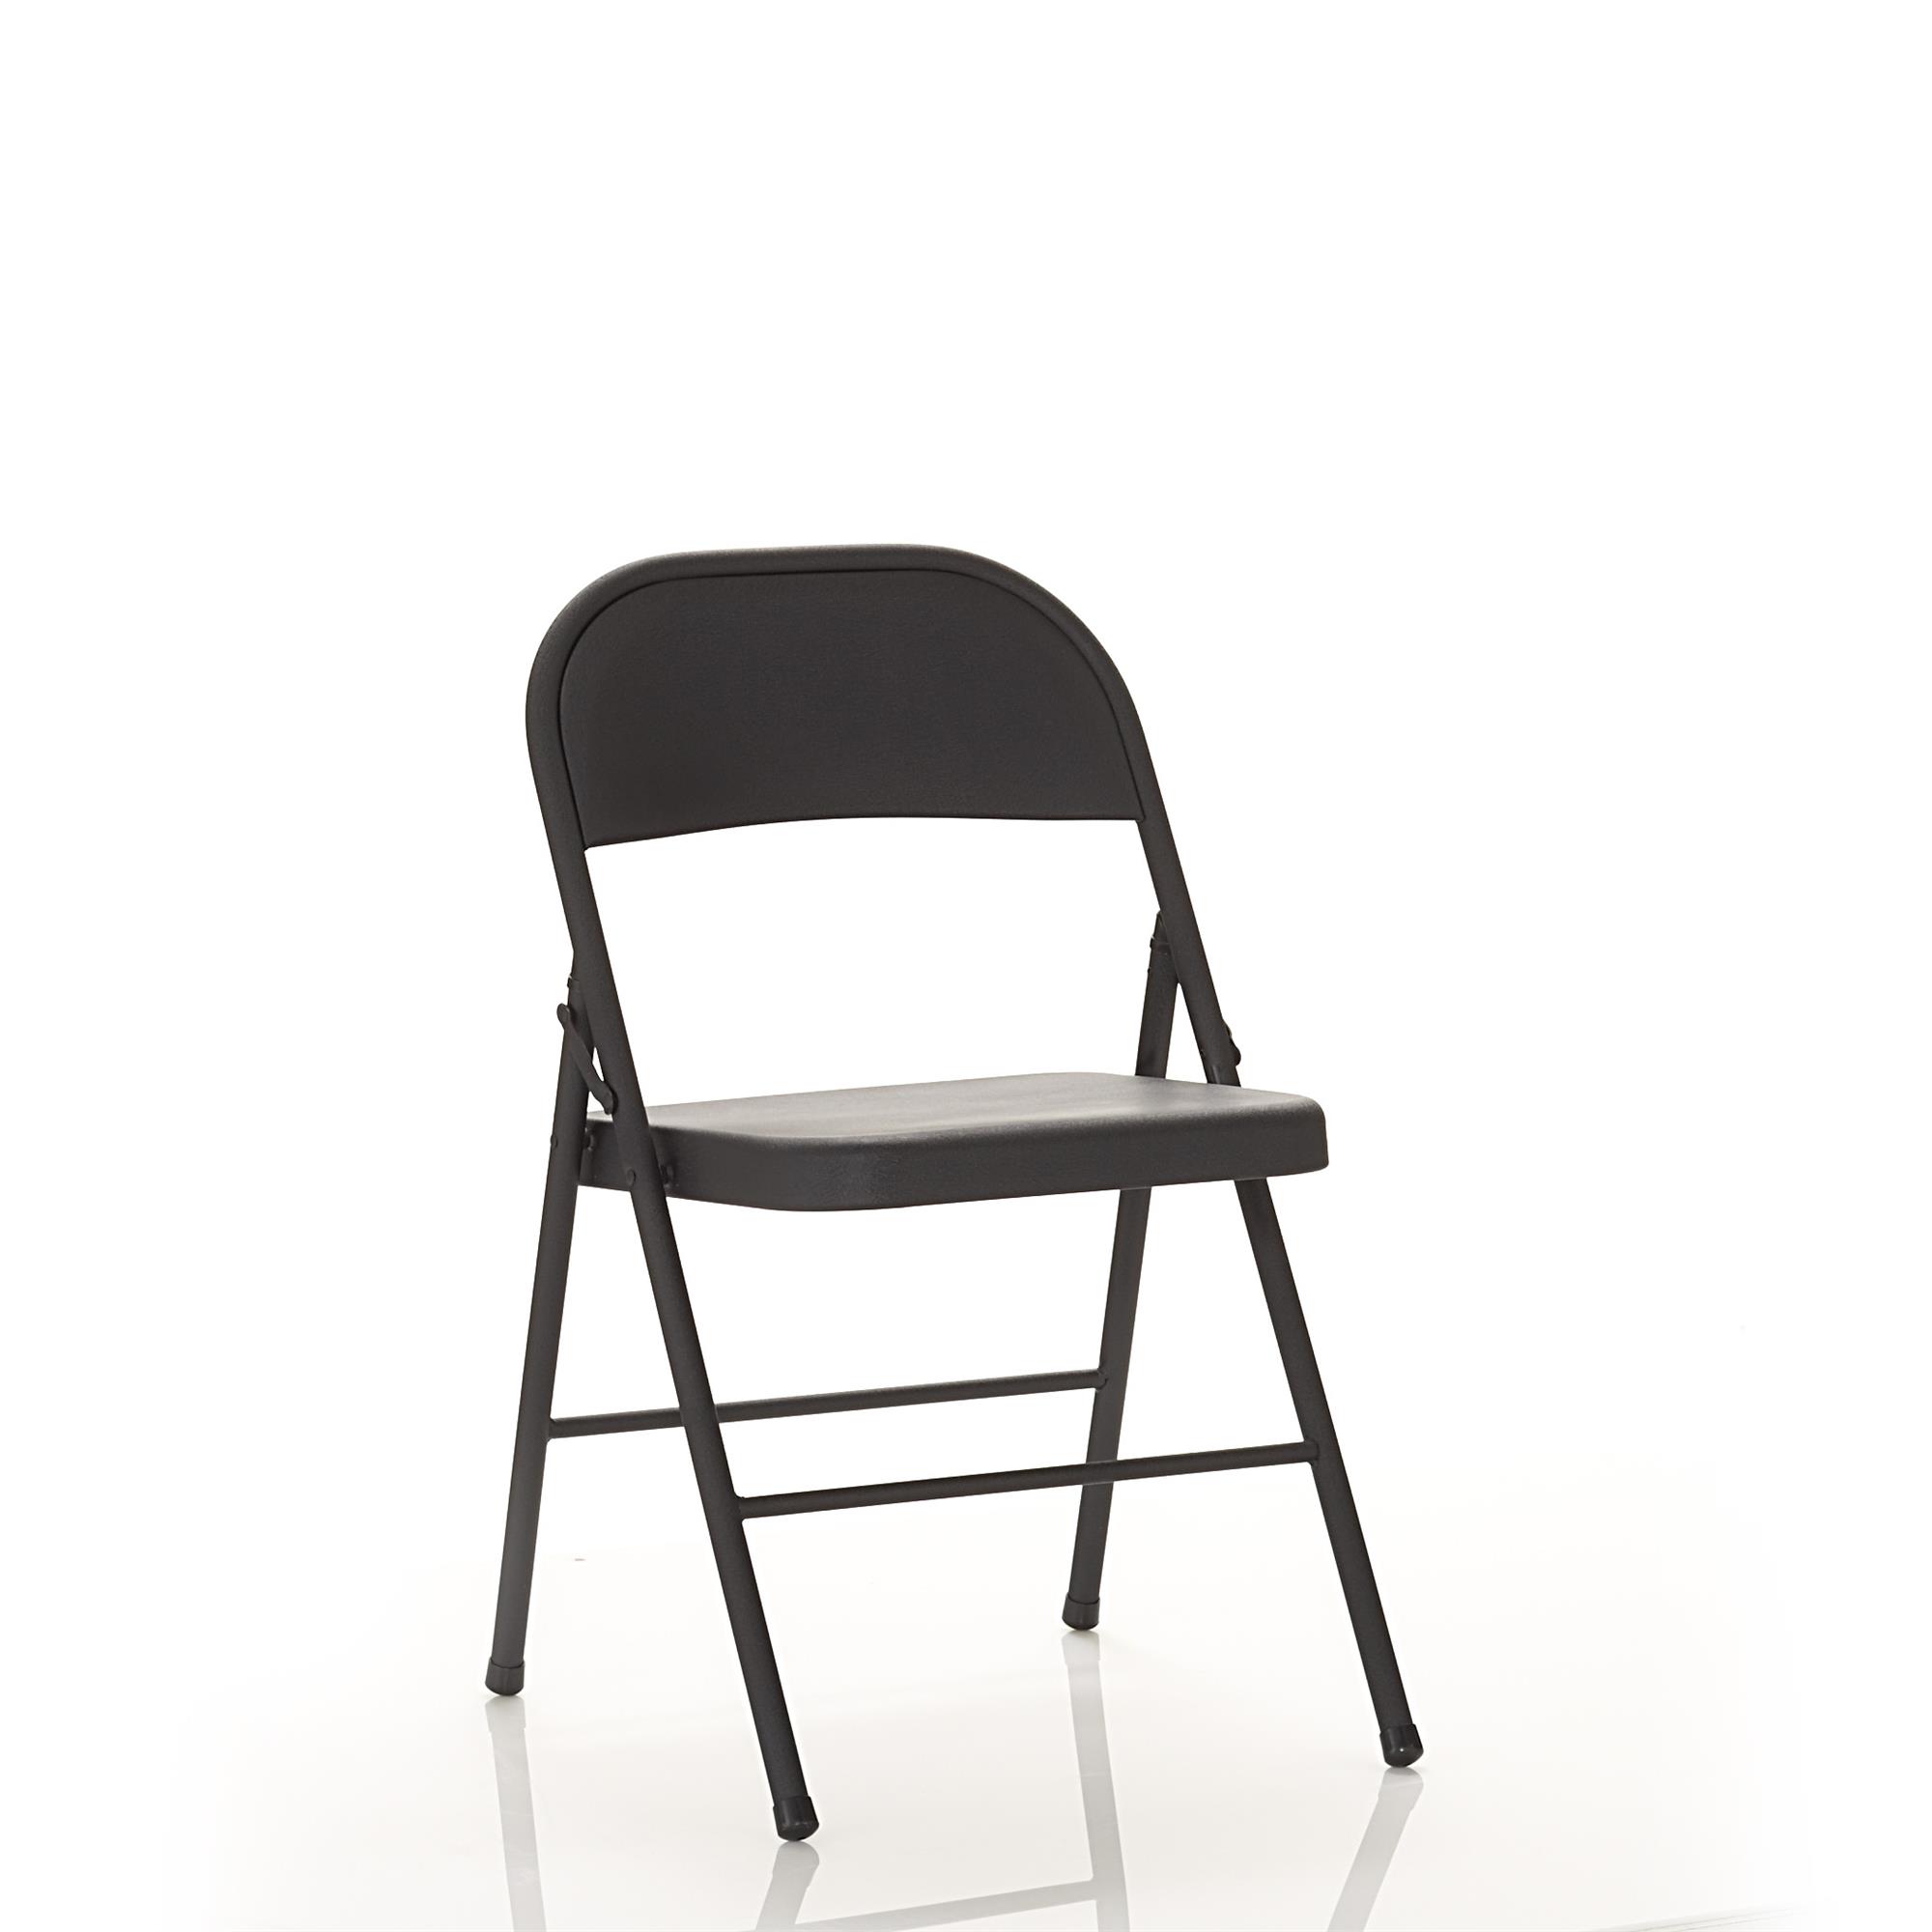 Mainstays Steel Folding Chair (4 Pack), Black - image 2 of 14